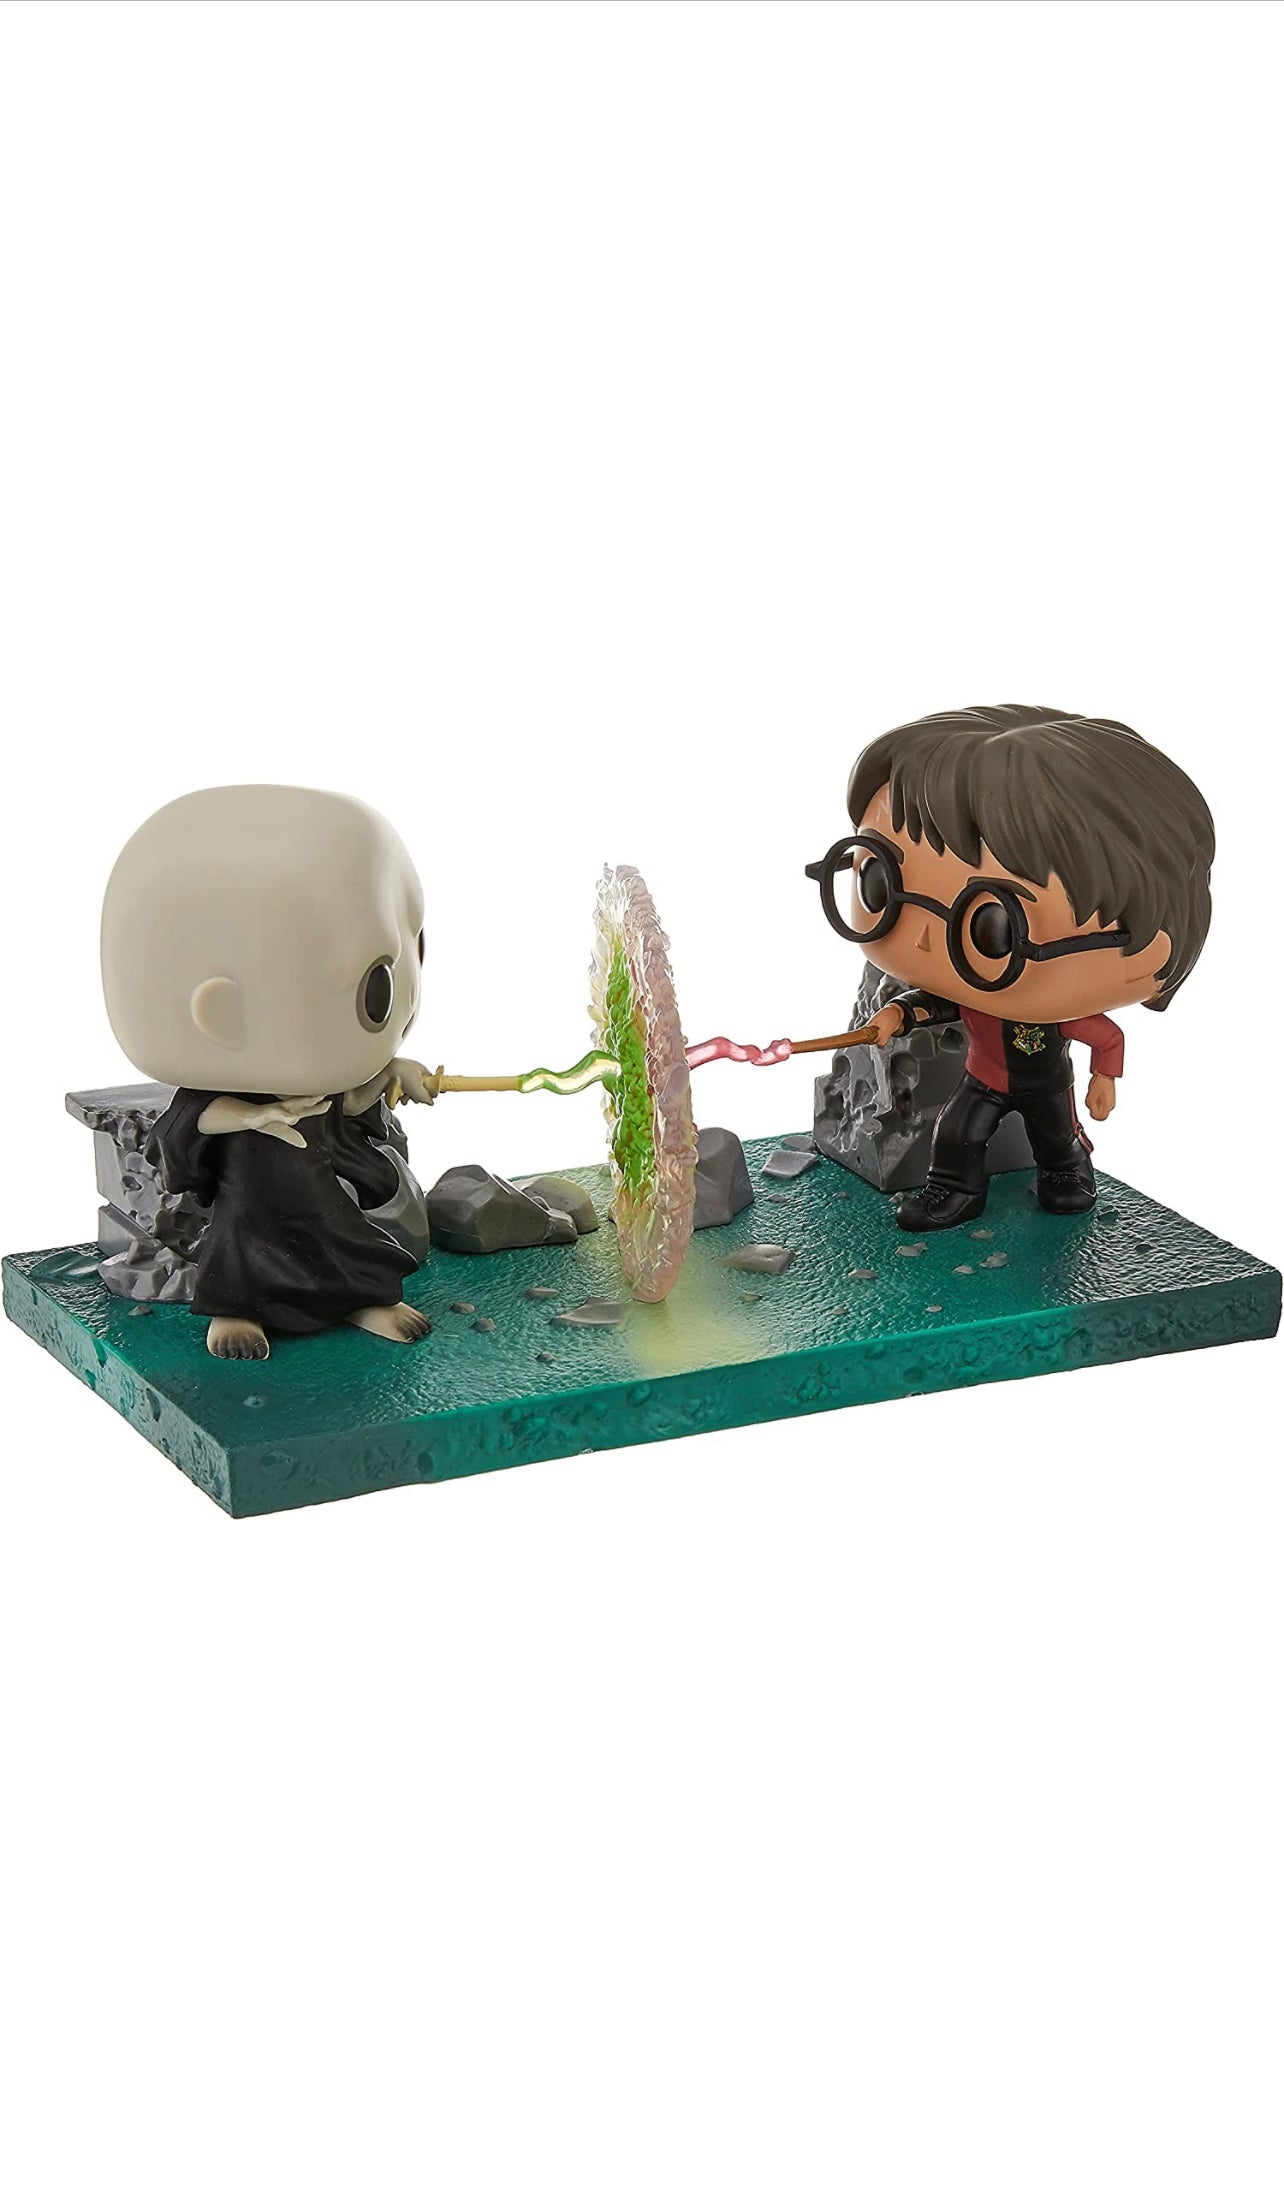 Pop! Harry Potter - Movie Moments Harry vs Voldemort - N° 119 - Funko